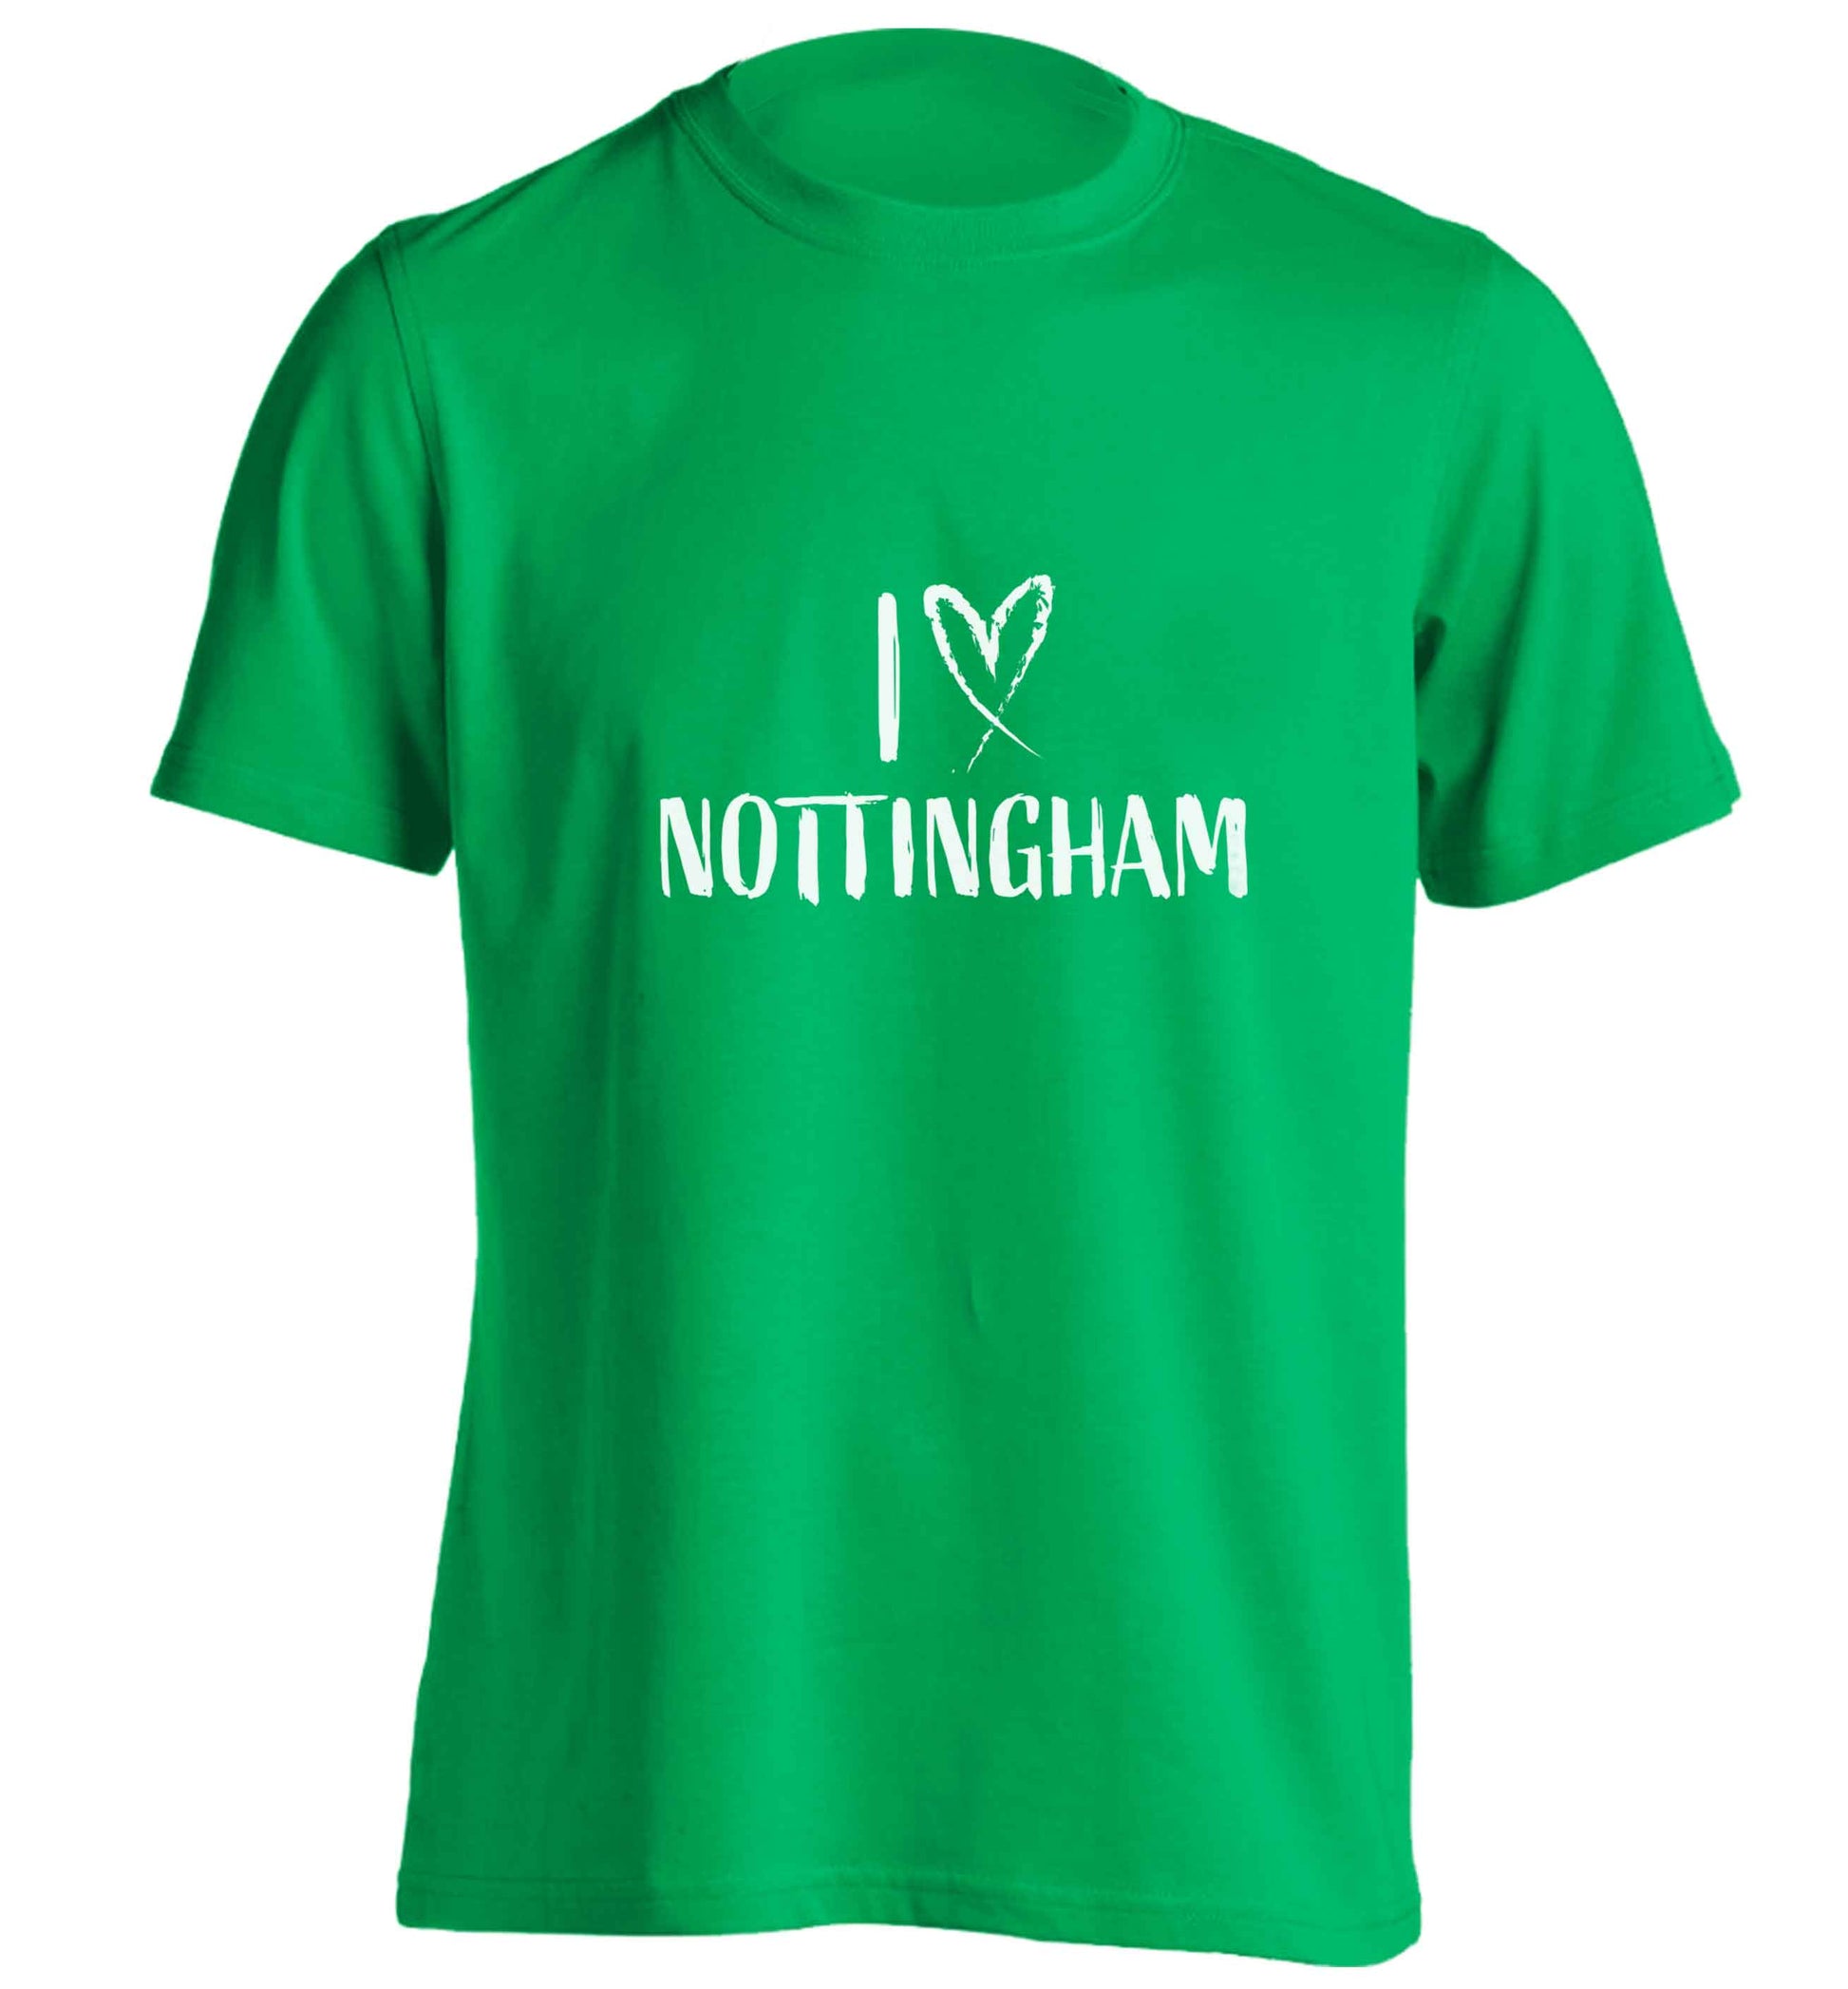 I love Nottingham adults unisex green Tshirt 2XL